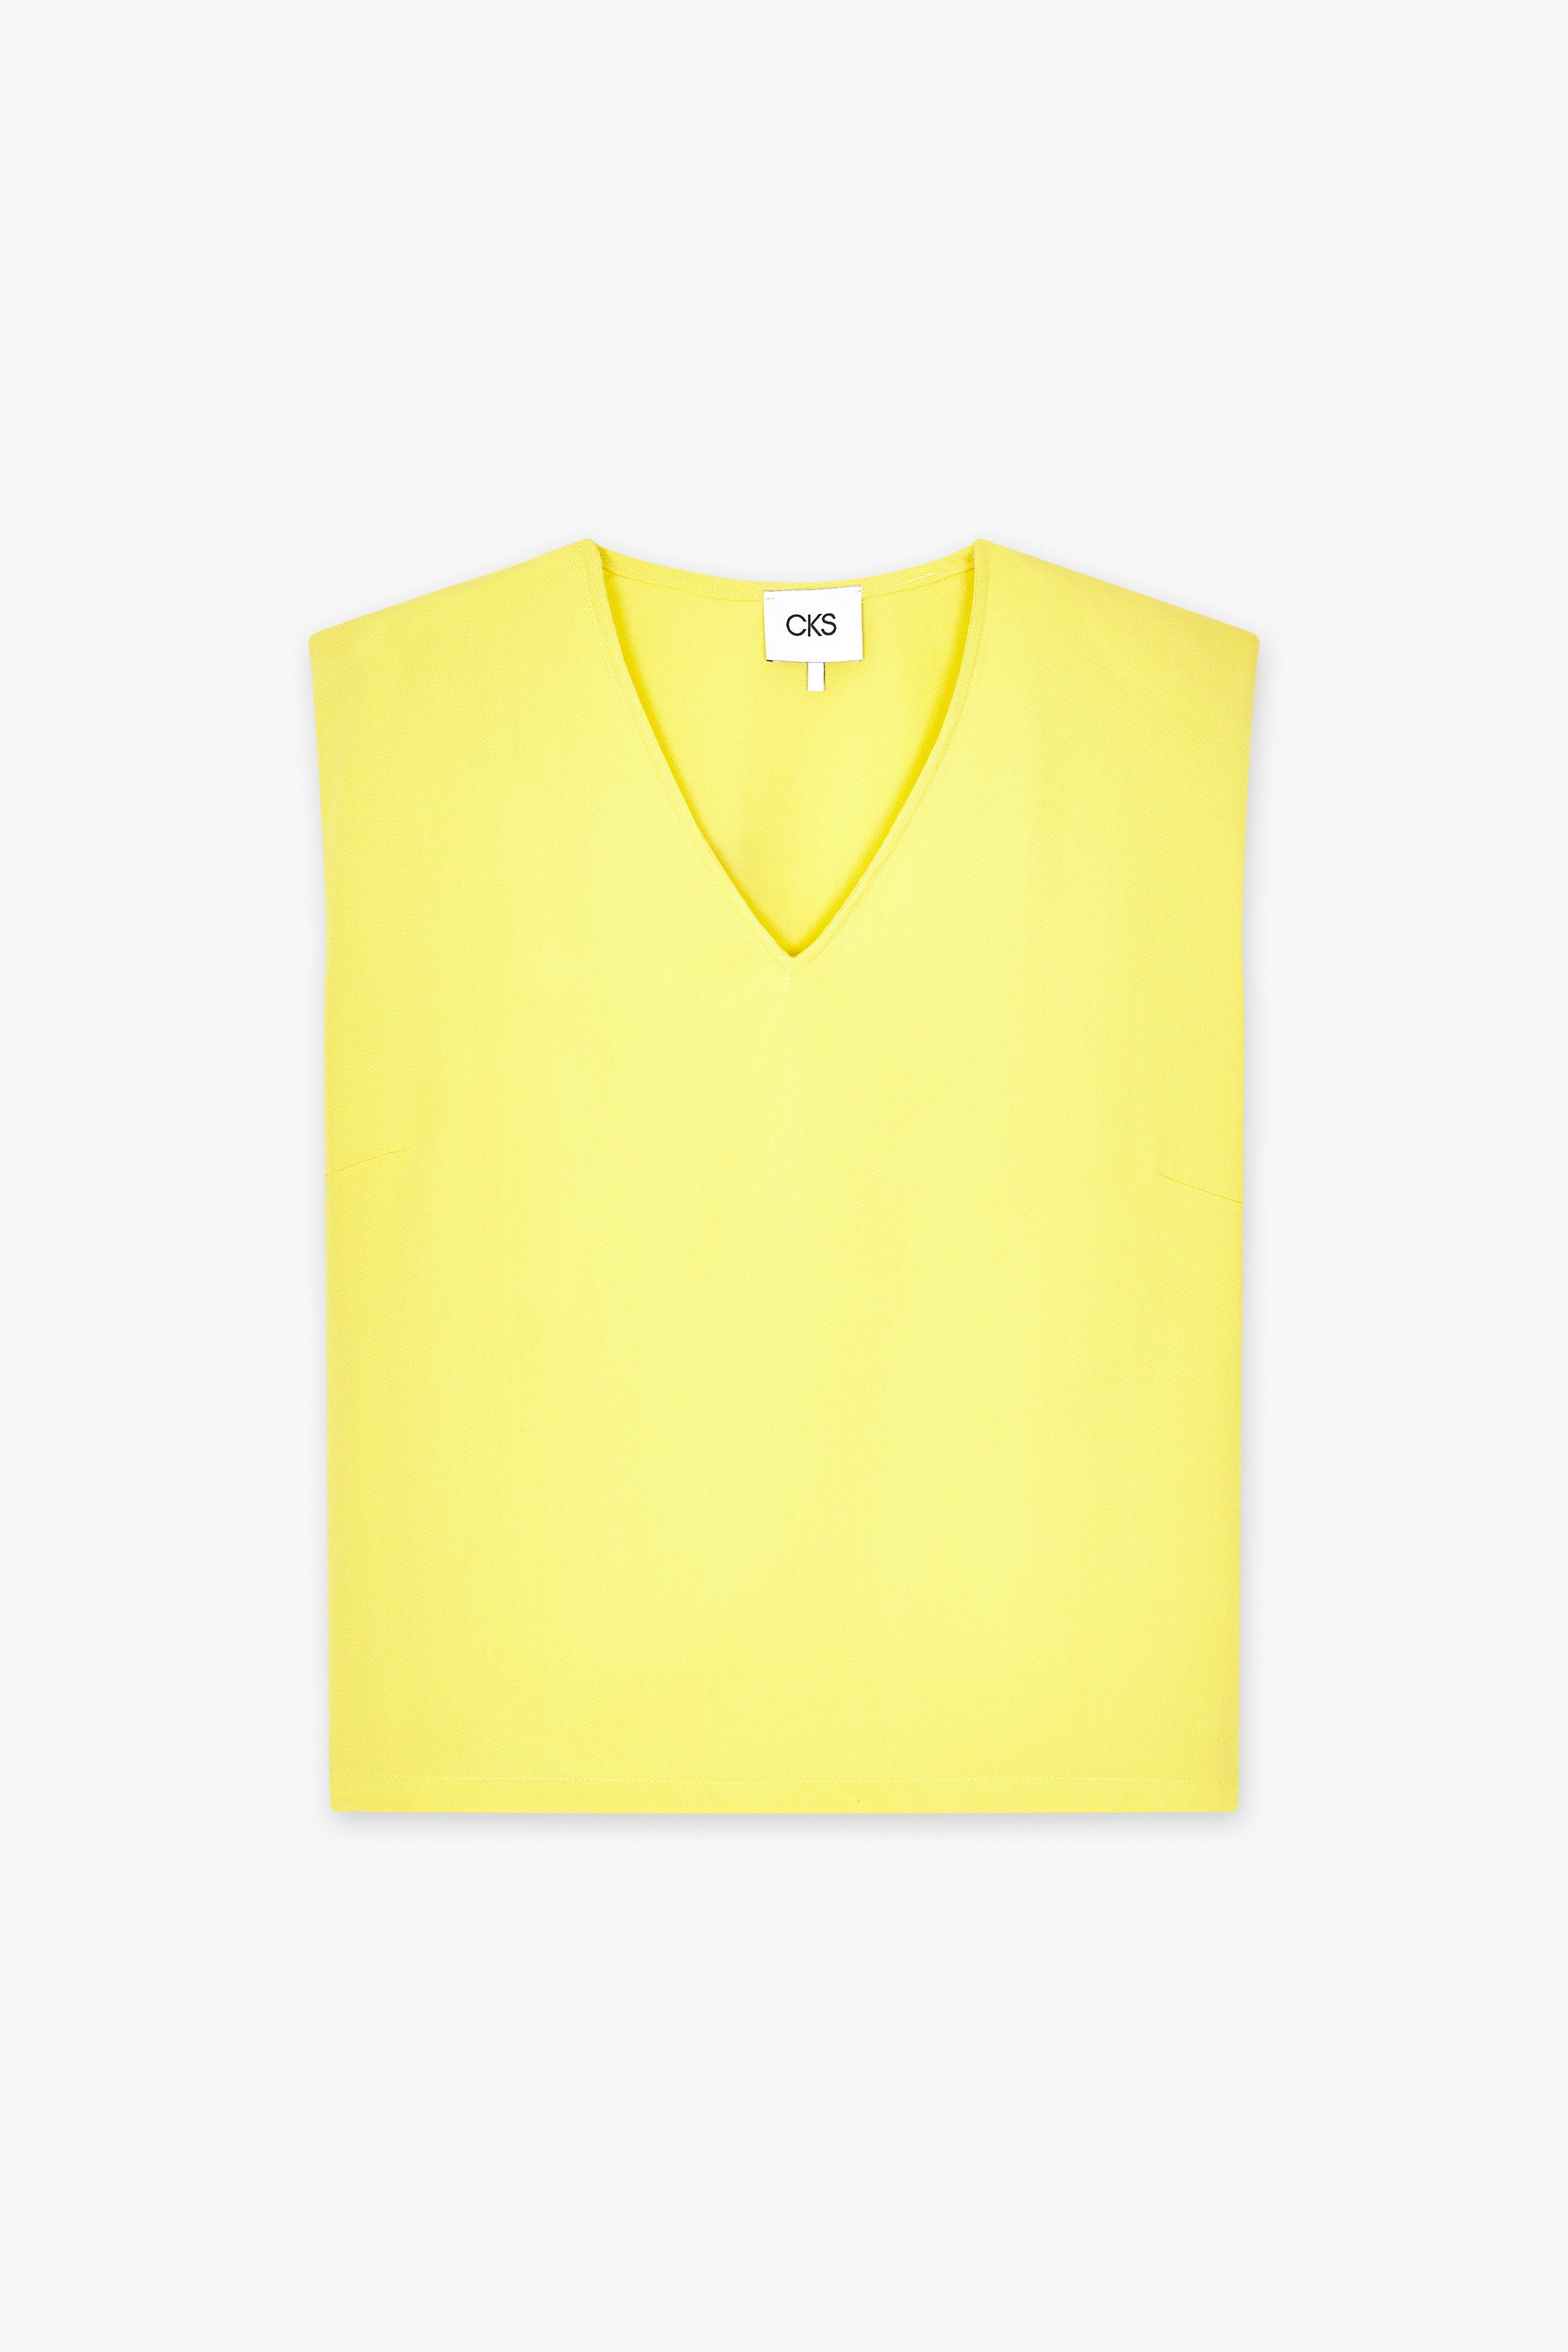 CKS Dames - SINDA - blouse half-length sleeves - light yellow